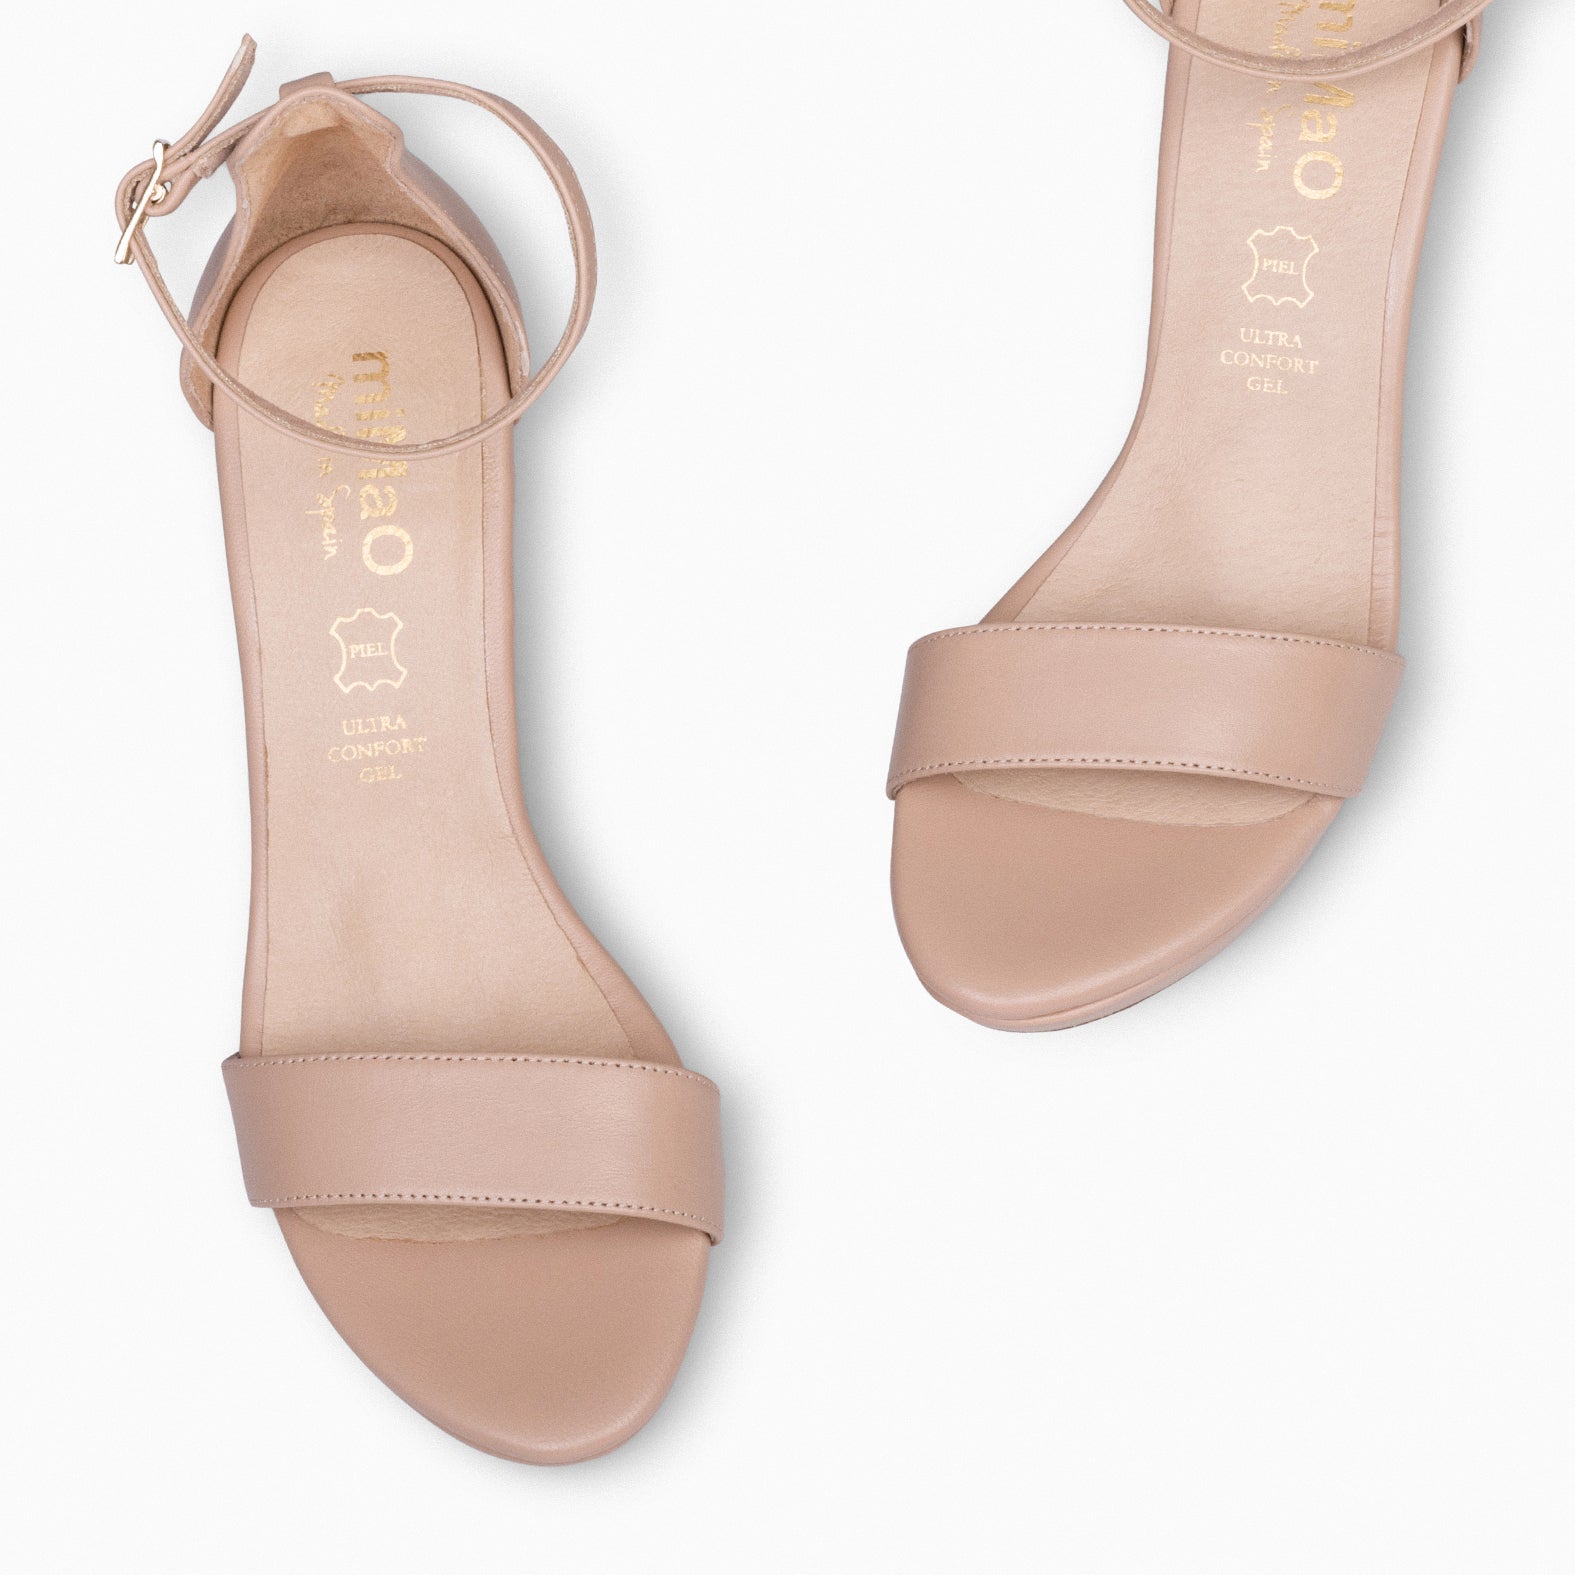 PARTY – NUDE high-heeled platform sandals